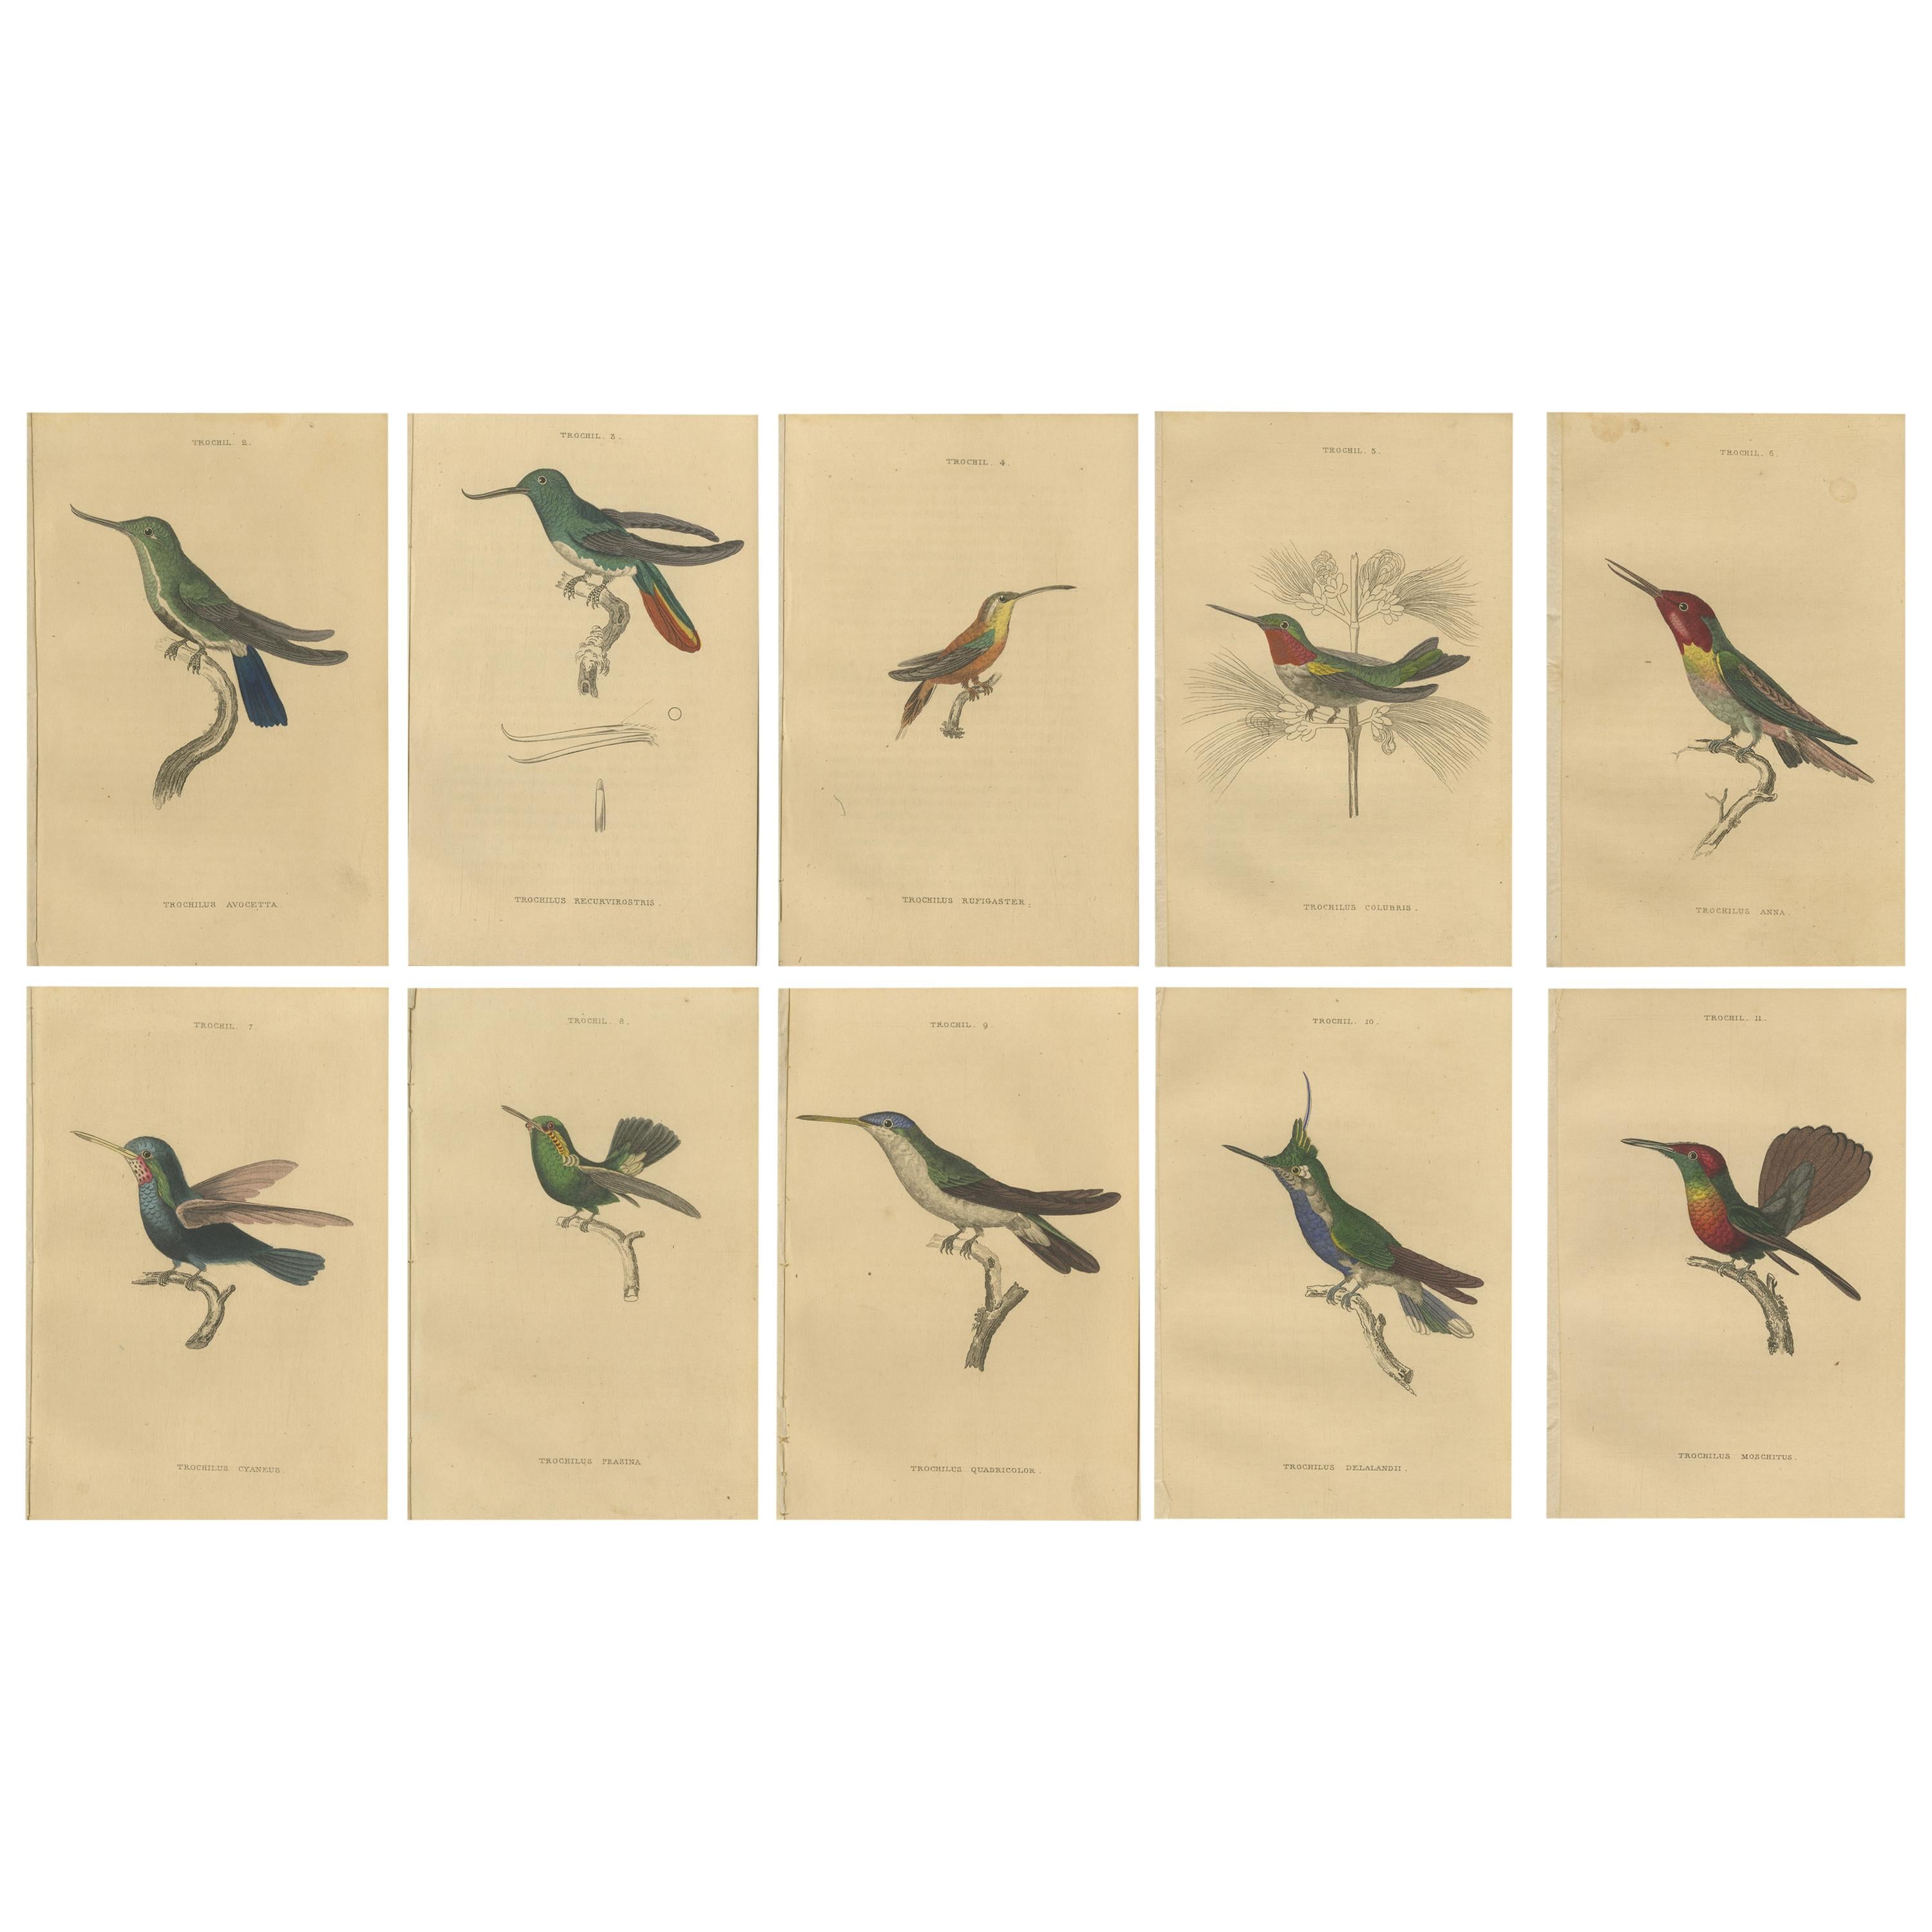 Hummingbird Bird Prints, Handcolored Fiery-Tailed Hummingbirds by Jardine, 1837 For Sale